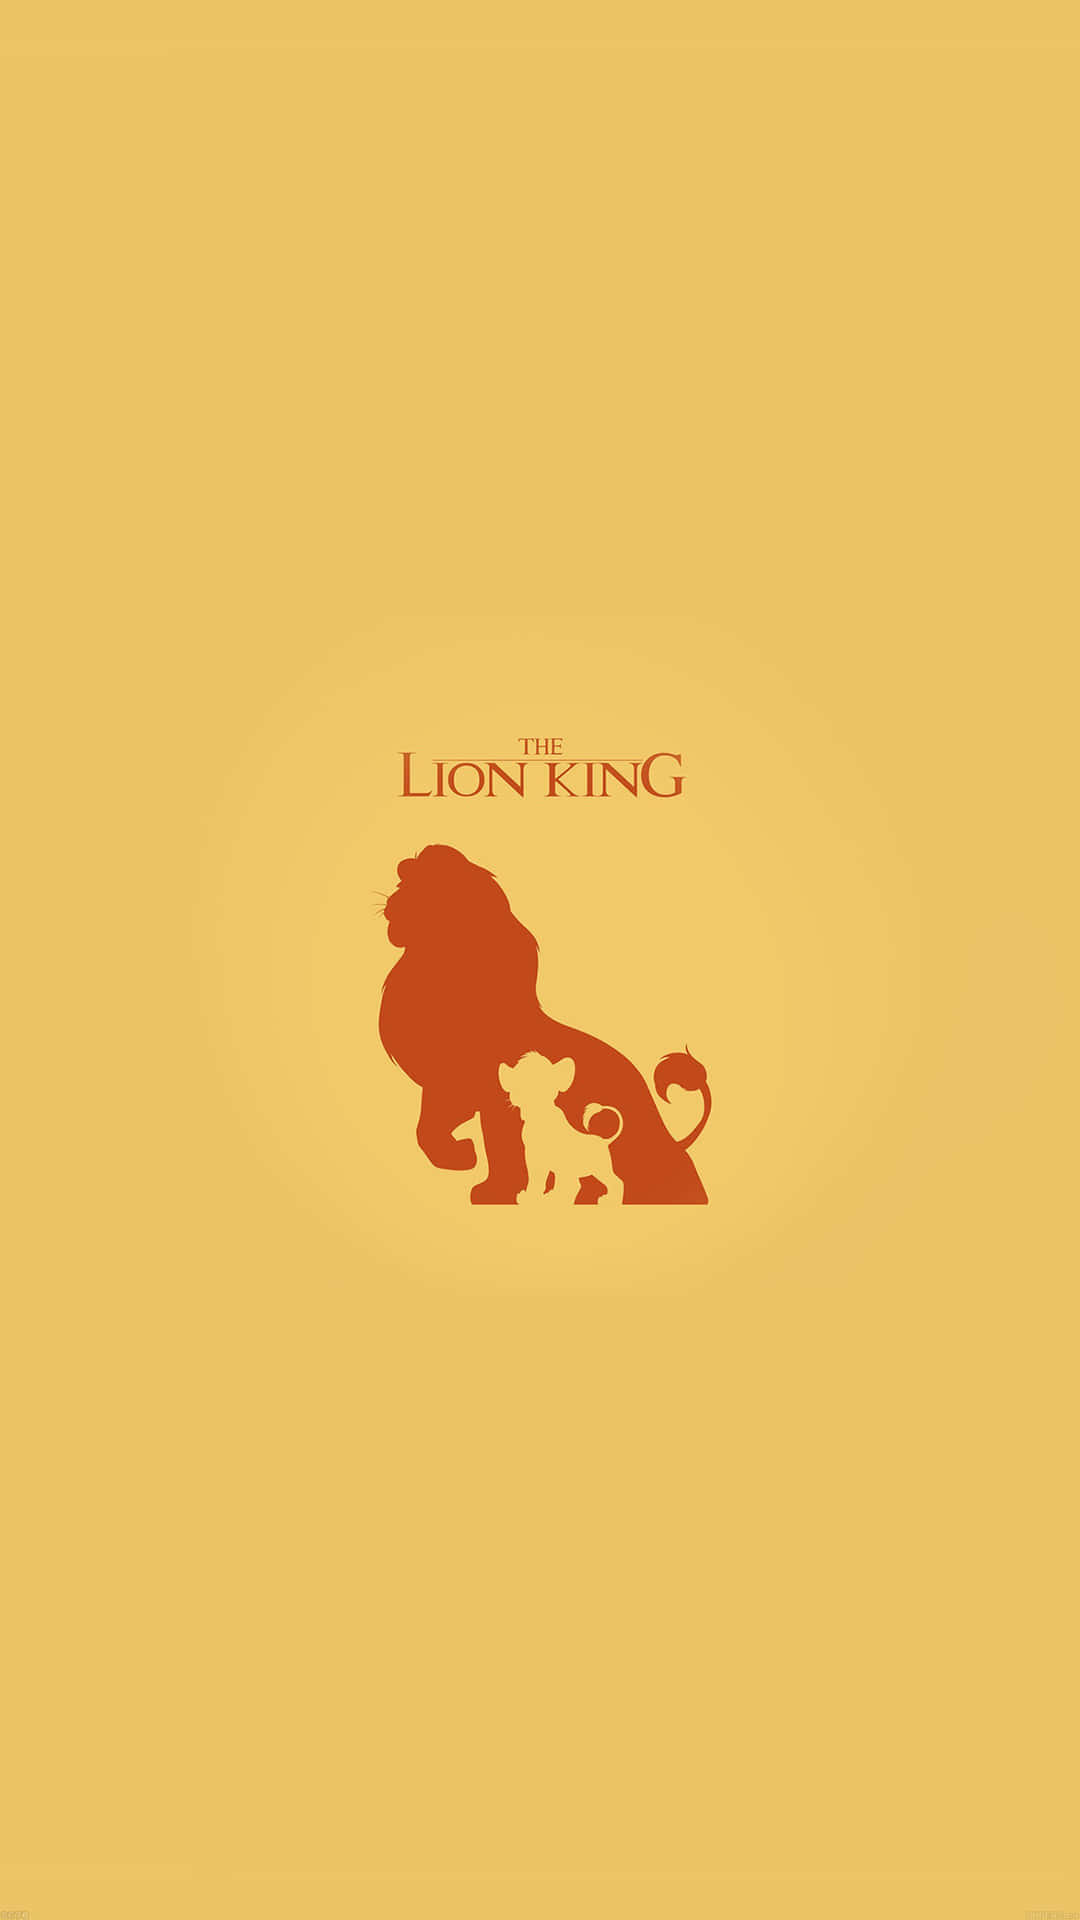 Cute Lion King Minimalist Poster Wallpaper